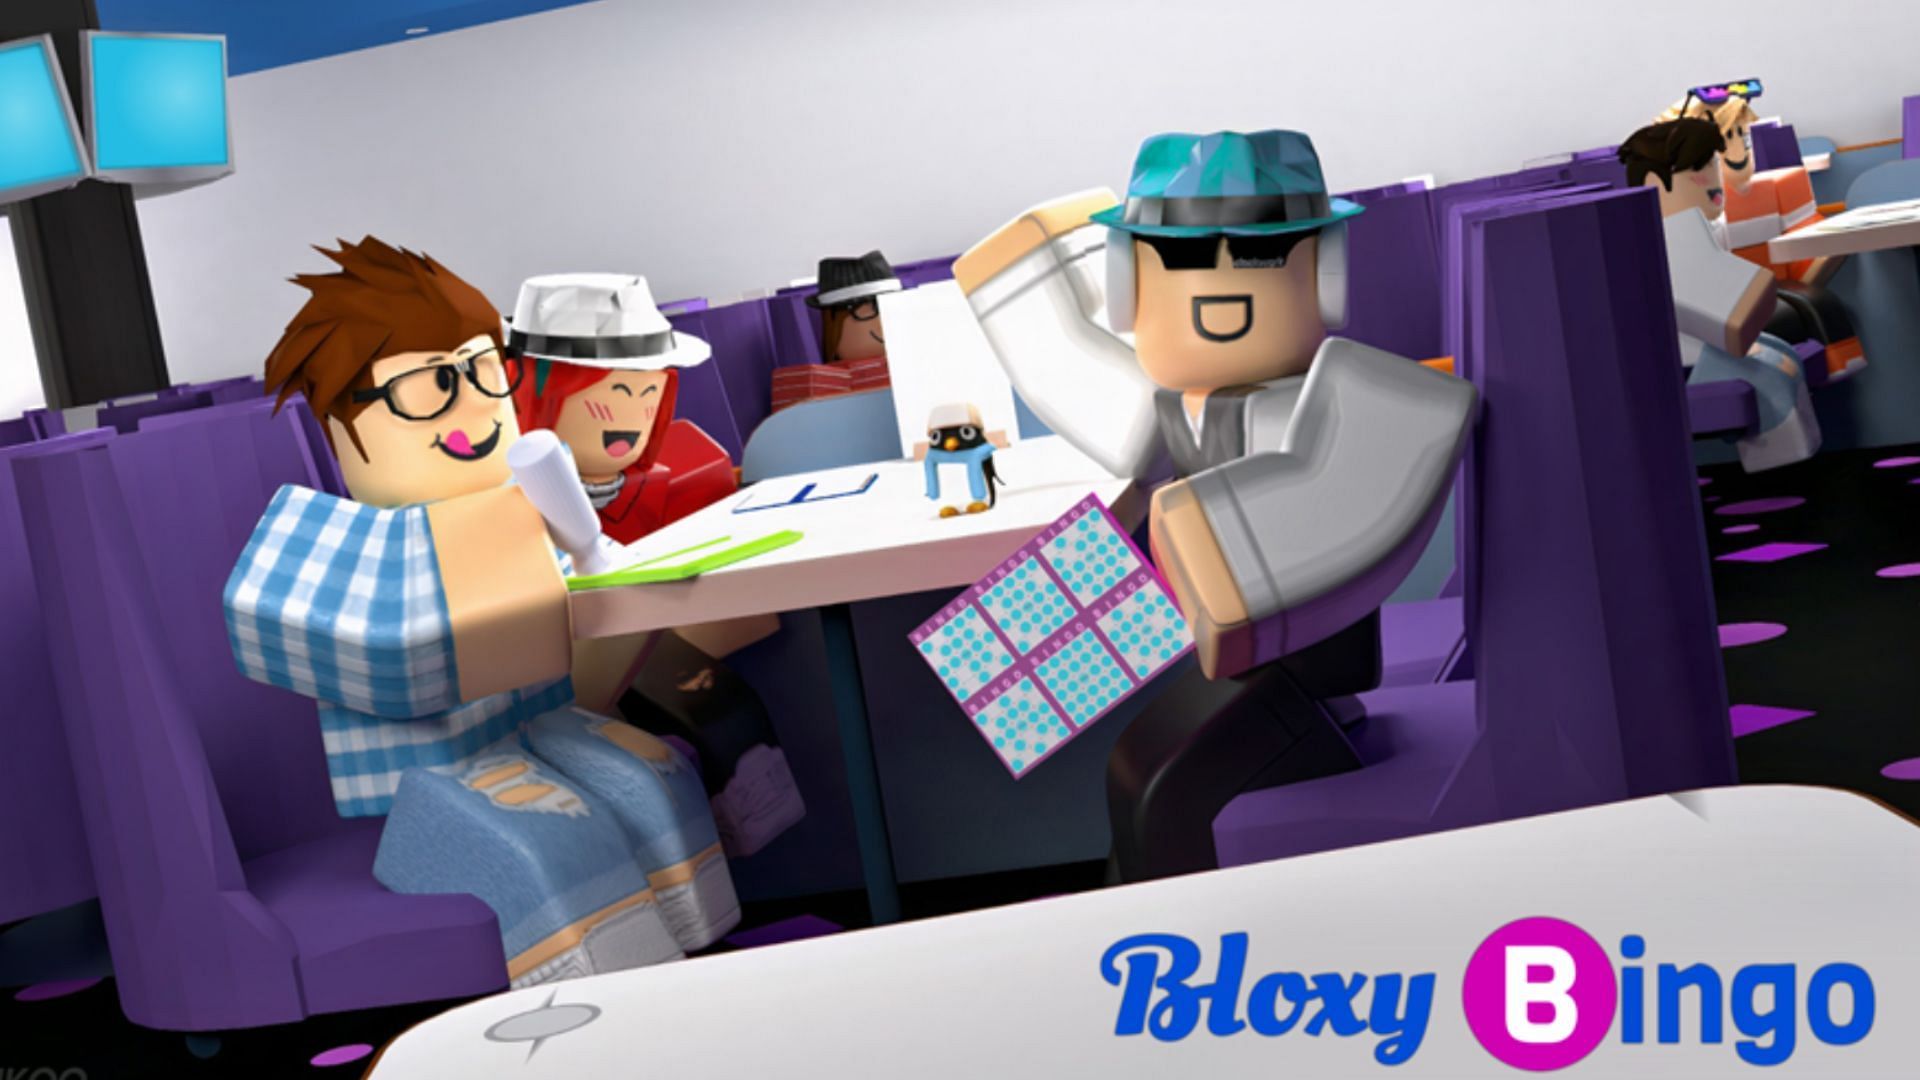 Bloxy Bingo Codes